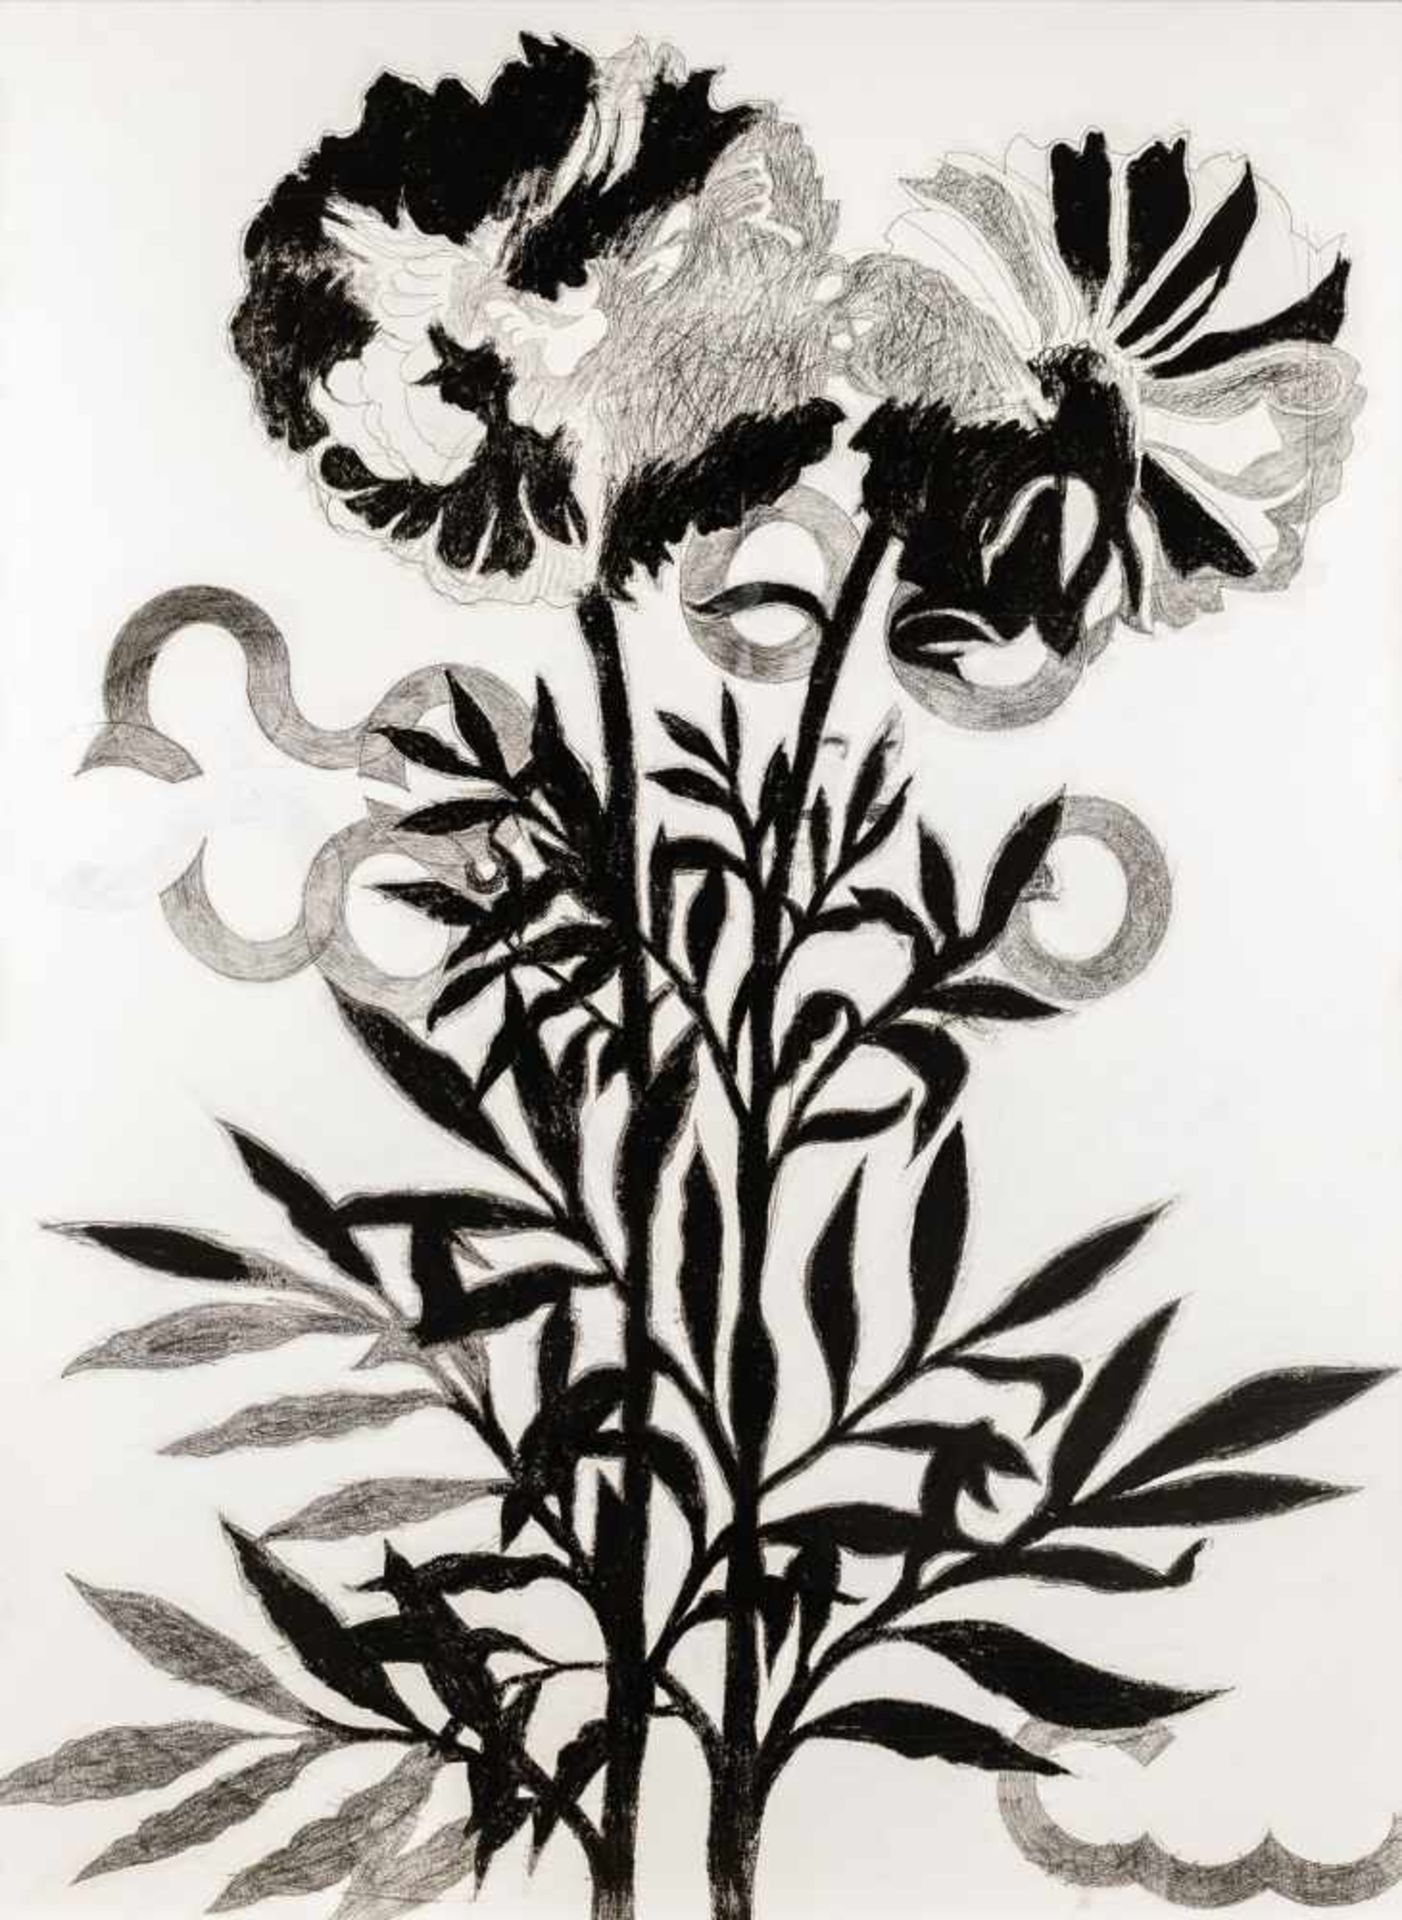 Franz Graf (hs art)Tulln 1954 *Mother flowerMischtechnik auf Leinwand / mixed media on canvas150 x